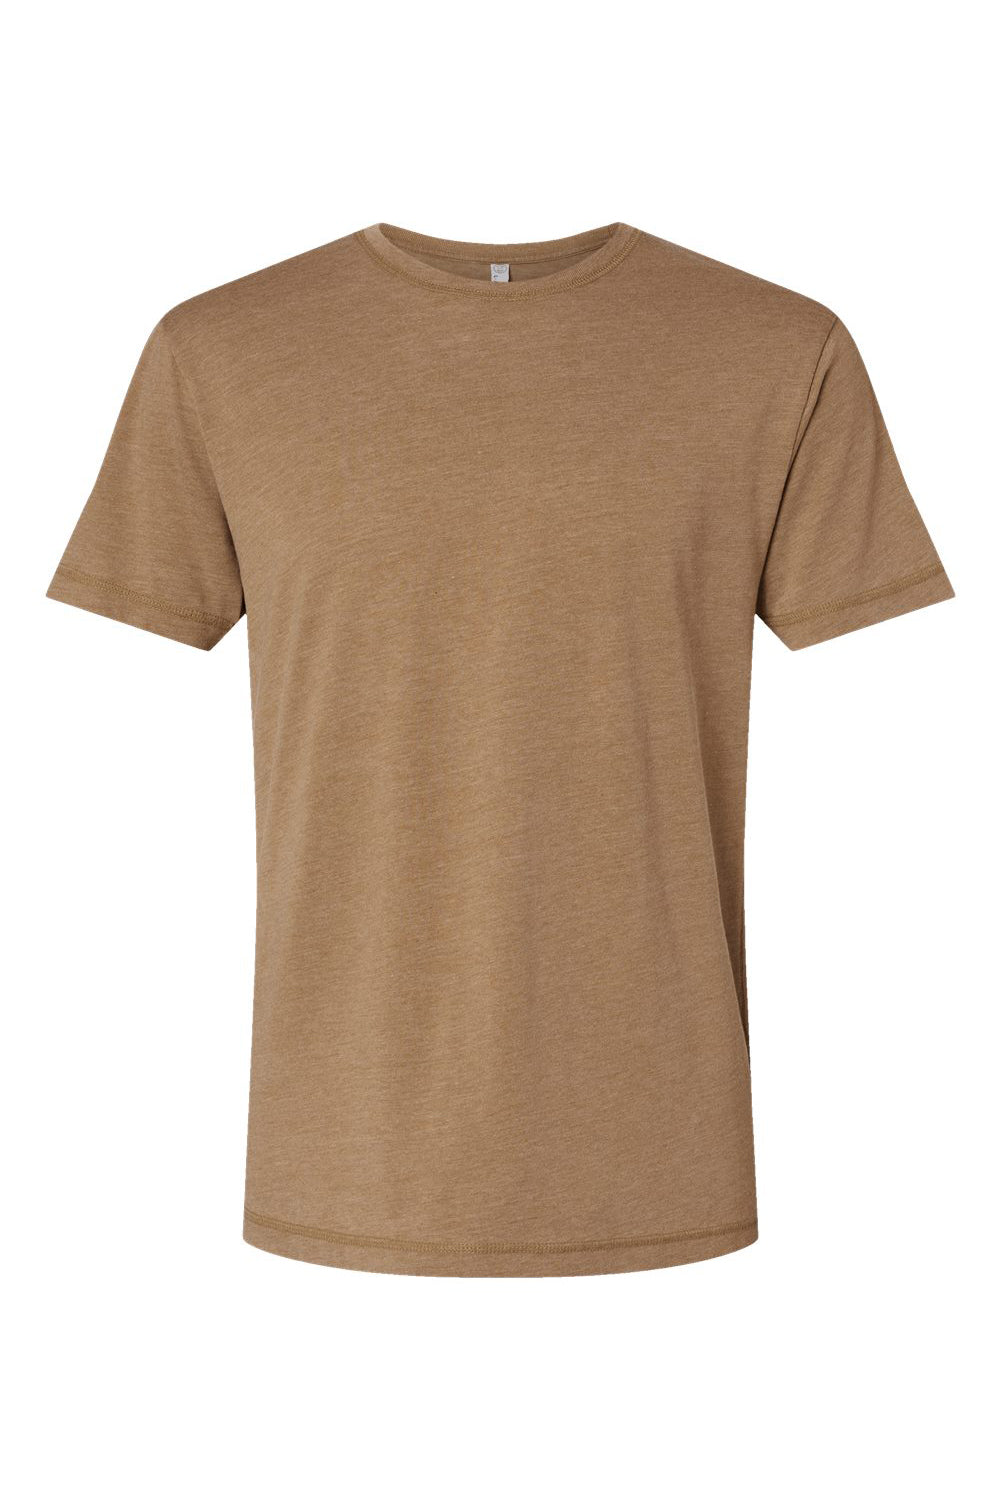 LAT 6902 Mens Vintage Wash Short Sleeve Crewneck T-Shirt Coyote Brown Flat Front